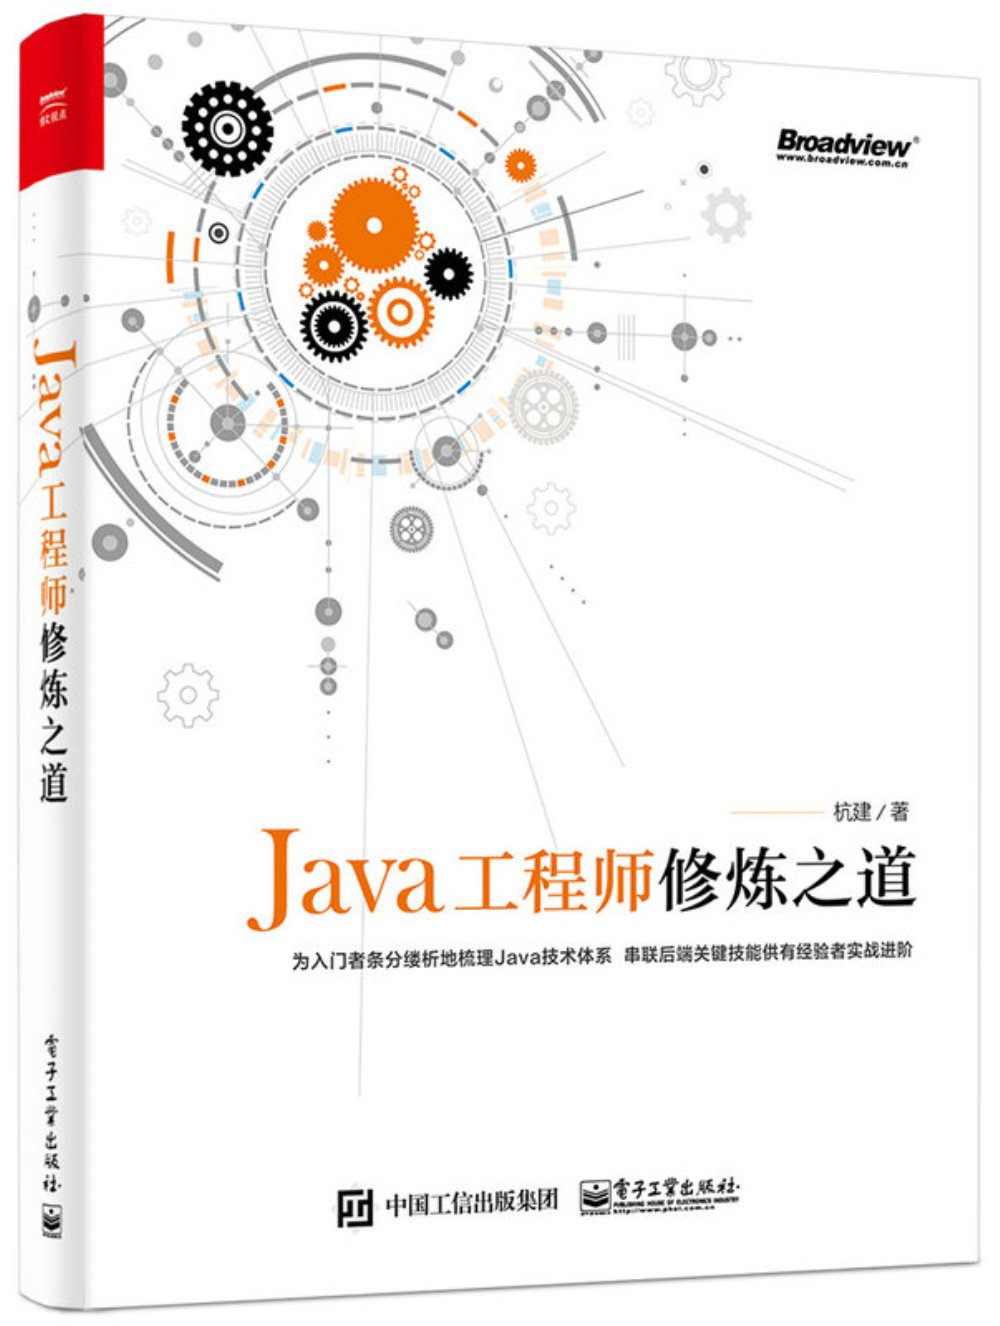 Java工程師修煉之道